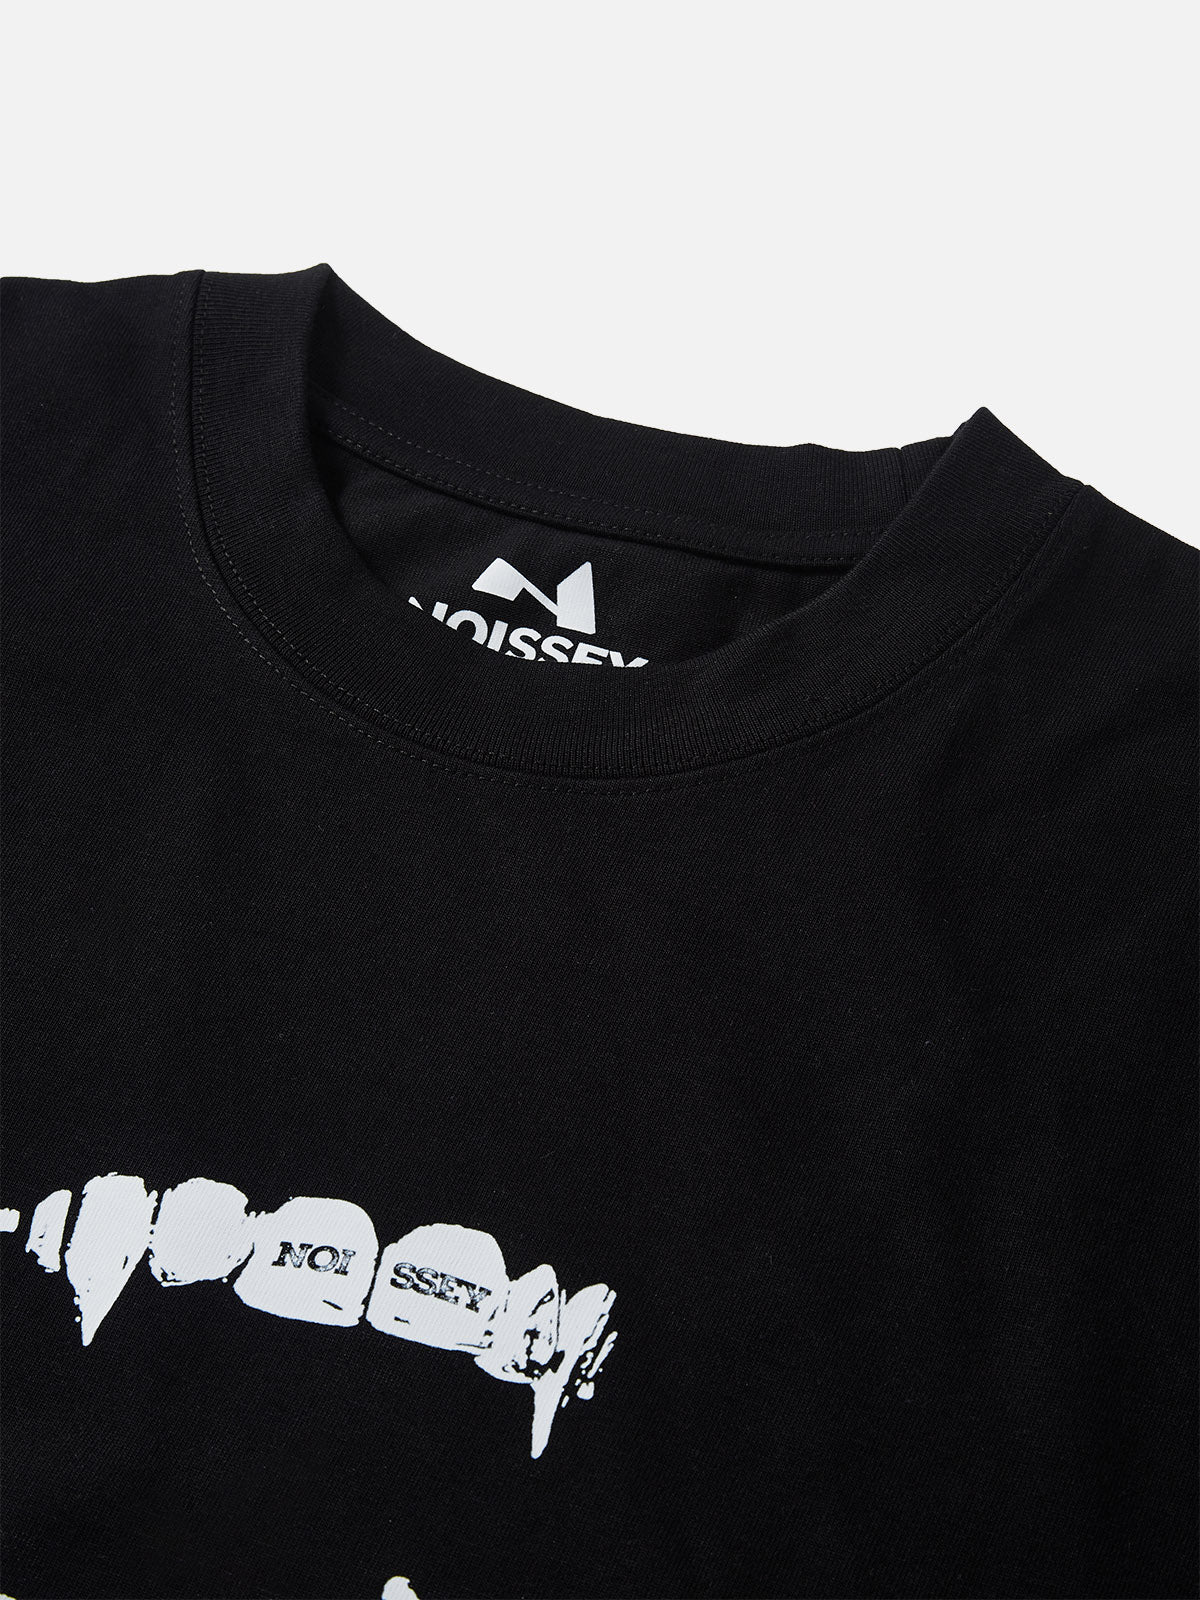 Noissey Fang Logo High-Quality Minimalist T-shirt